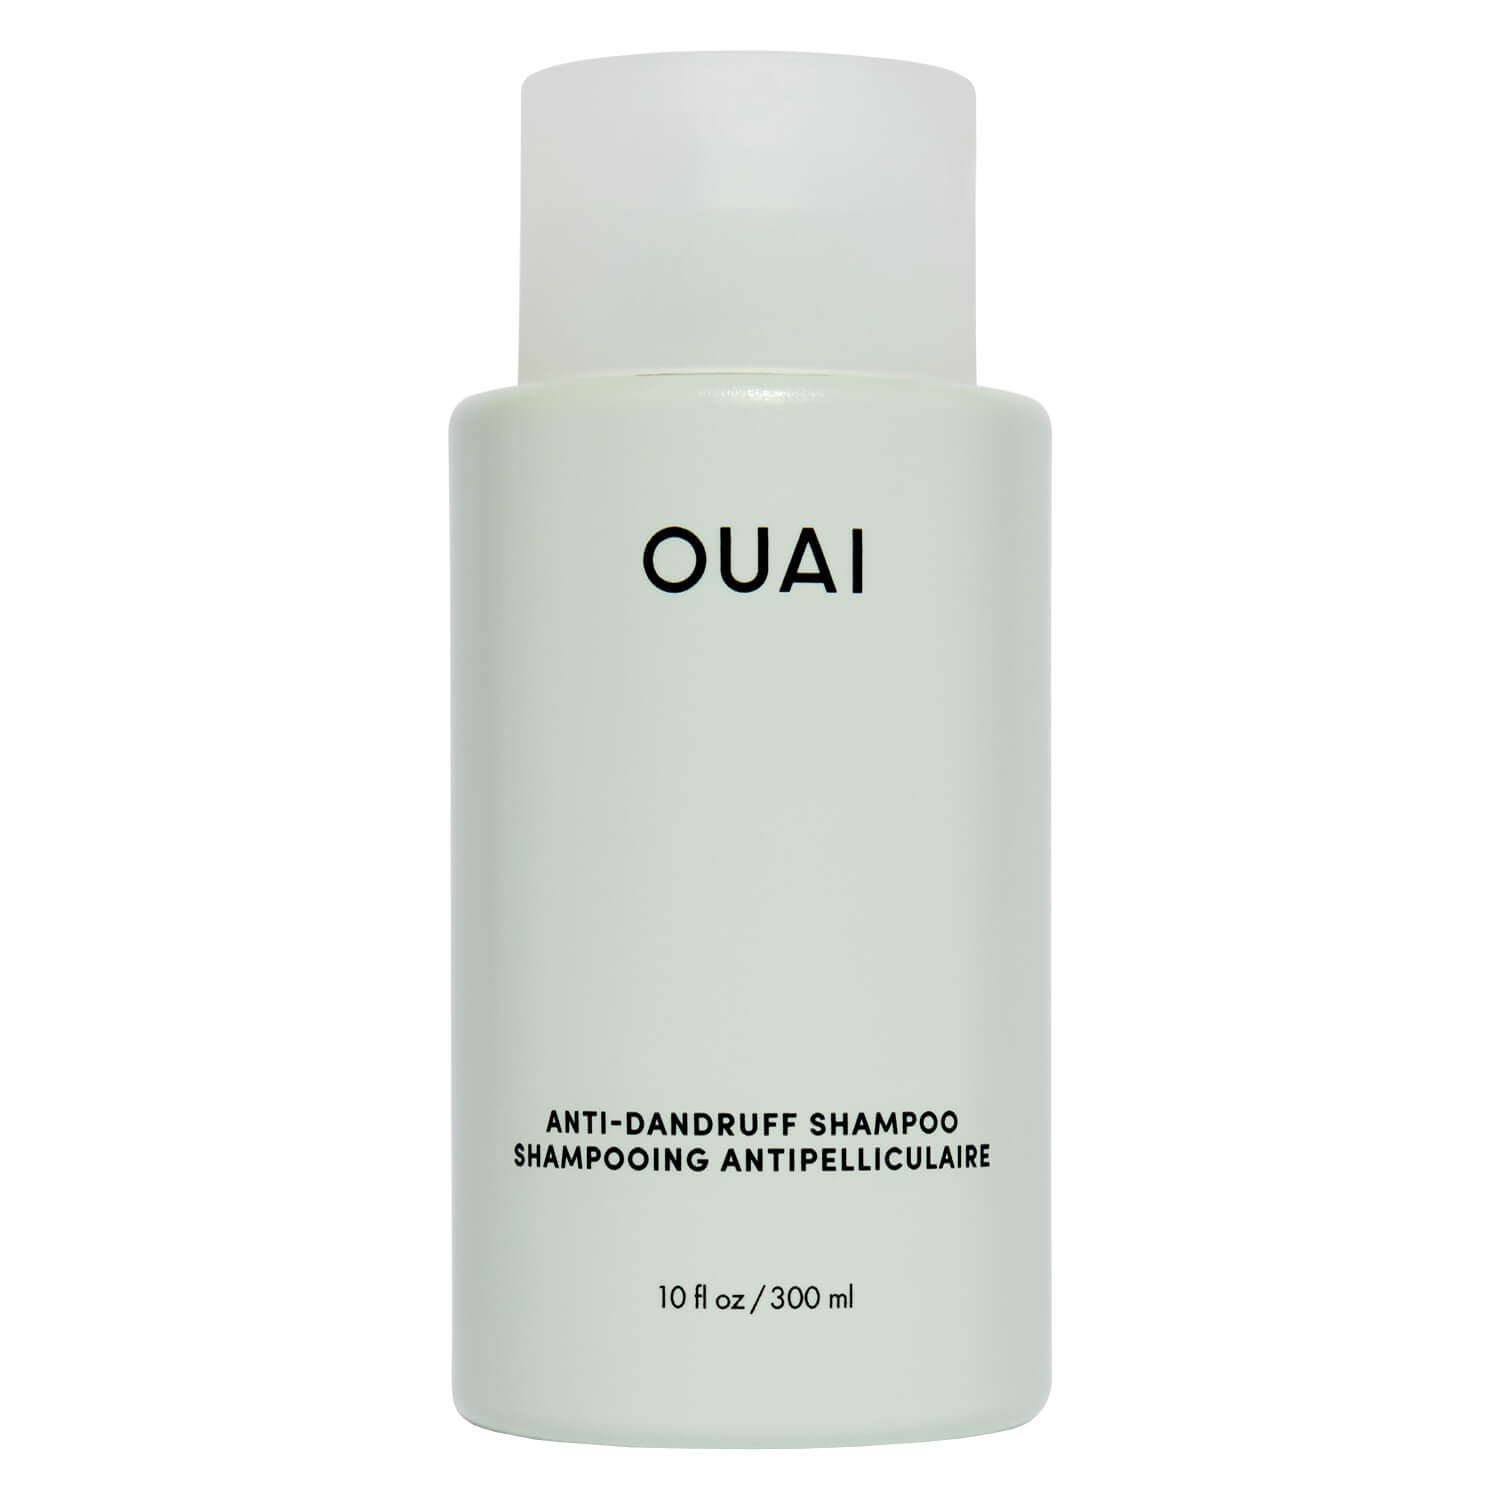 Produktbild von OUAI - Anti-Dandruff Shampoo